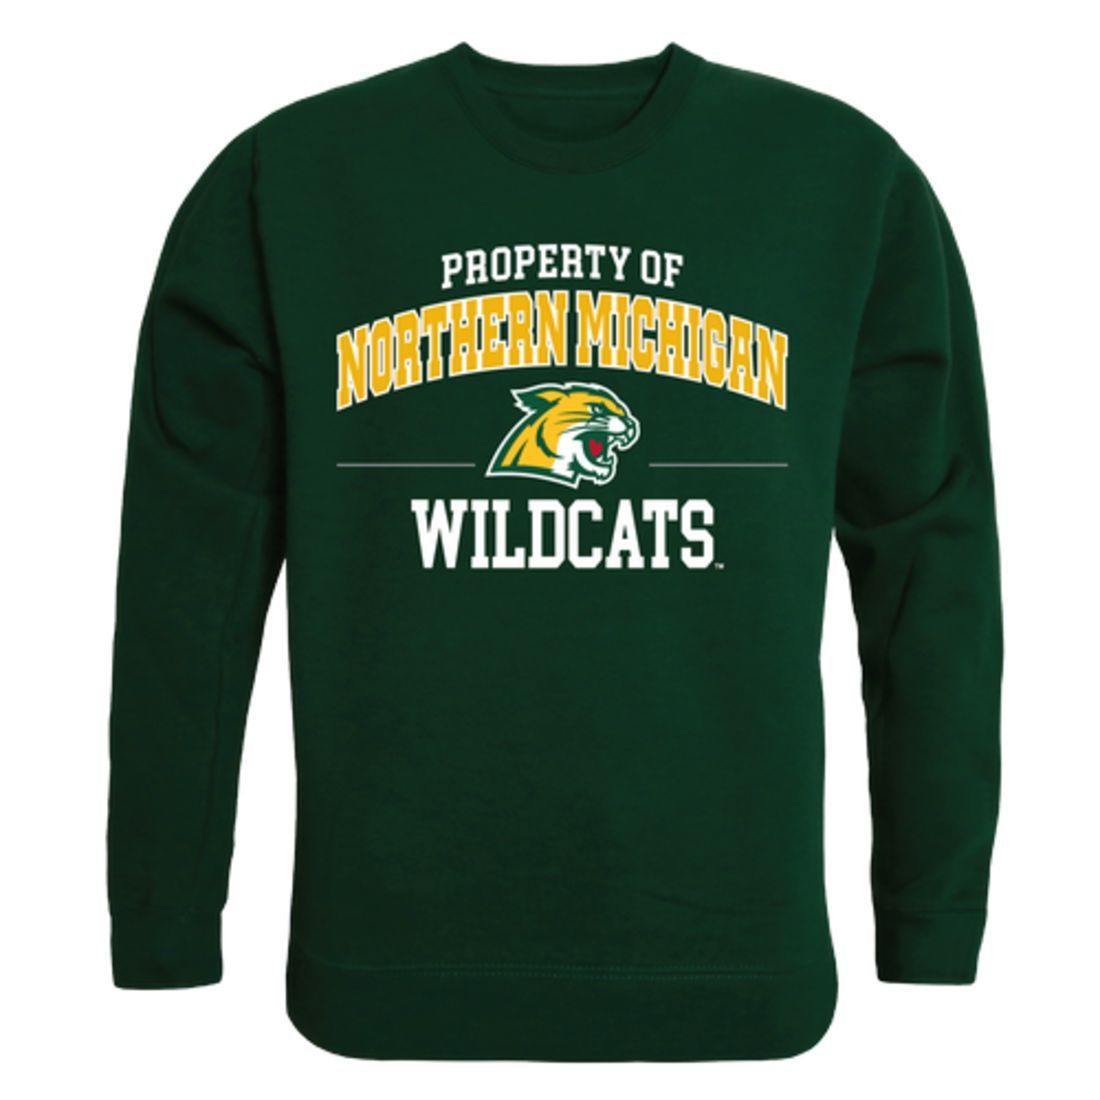 NMU Northern Michigan University Wildcats Property Crewneck Pullover Sweatshirt Sweater Forest-Campus-Wardrobe